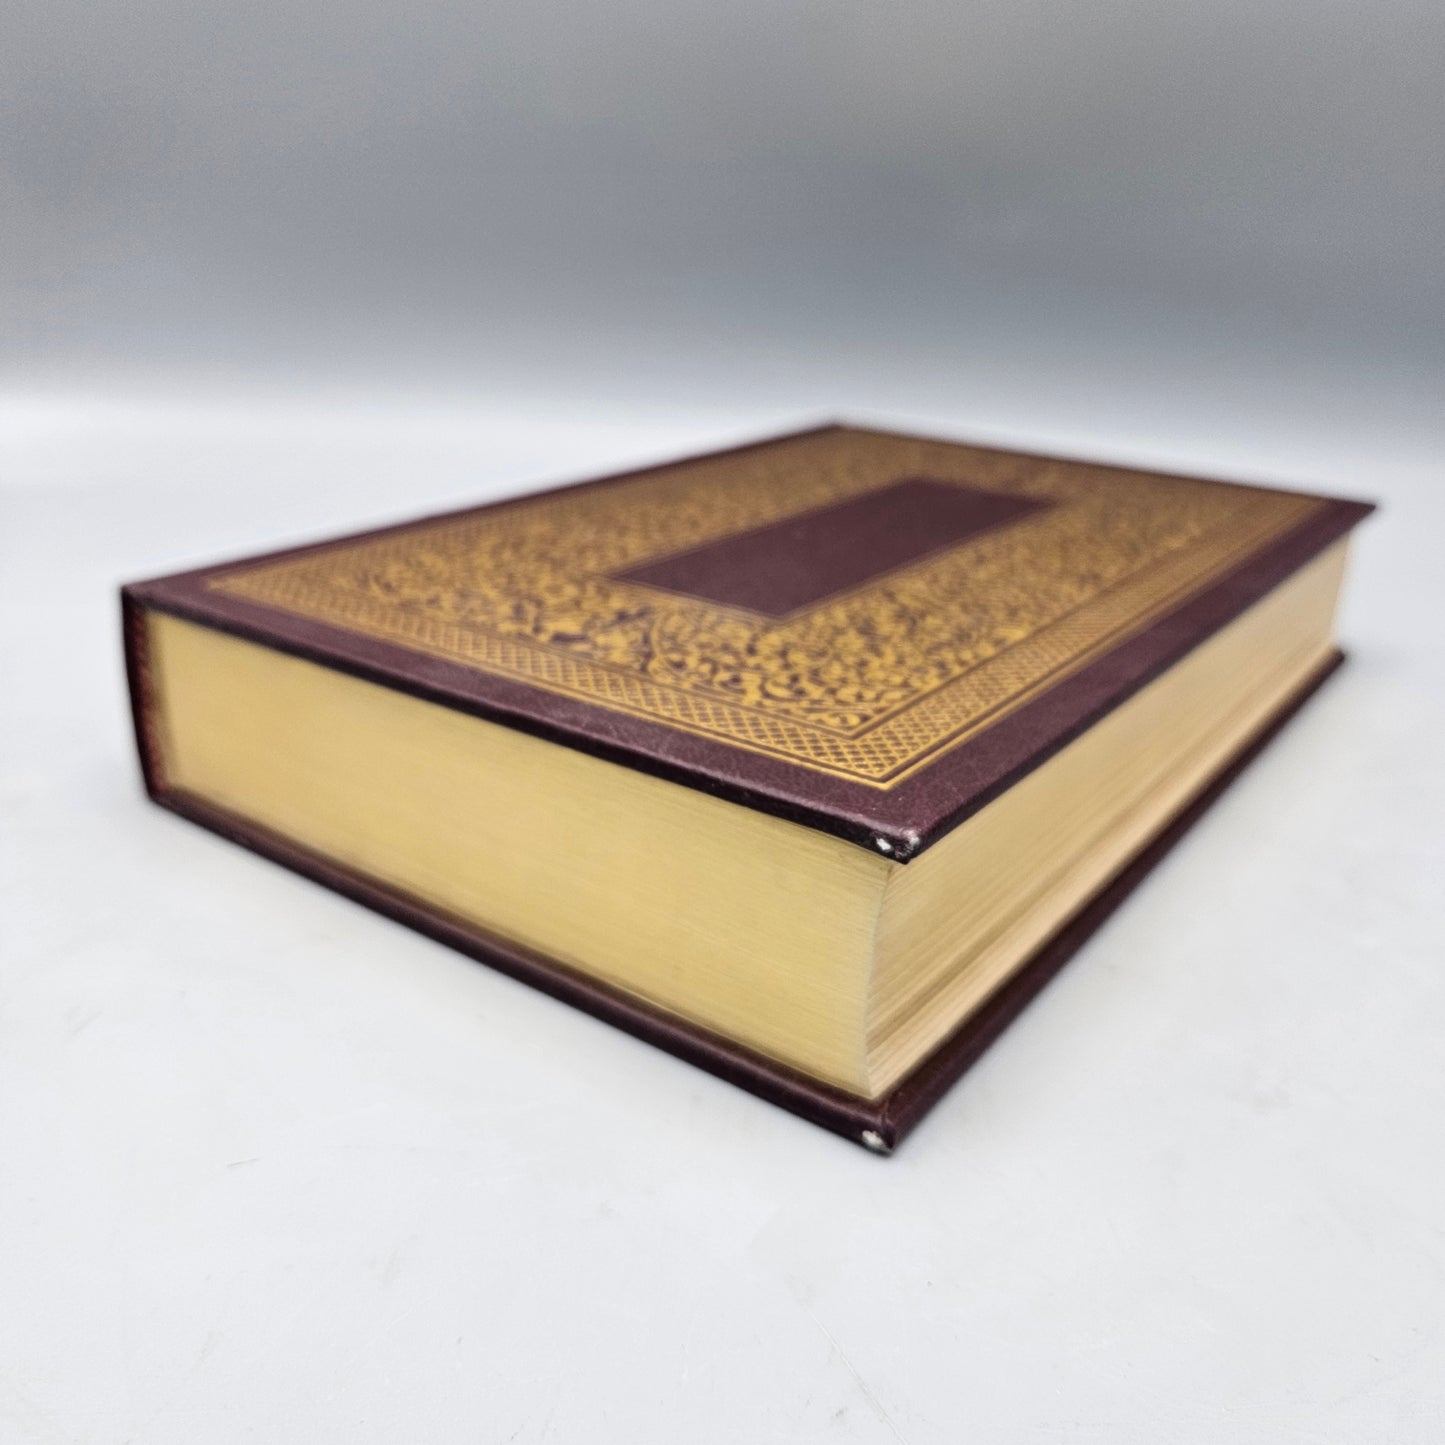 Leatherbound Book - Francois Rabelais "Gargantua and Pantagruel" Franklin Library